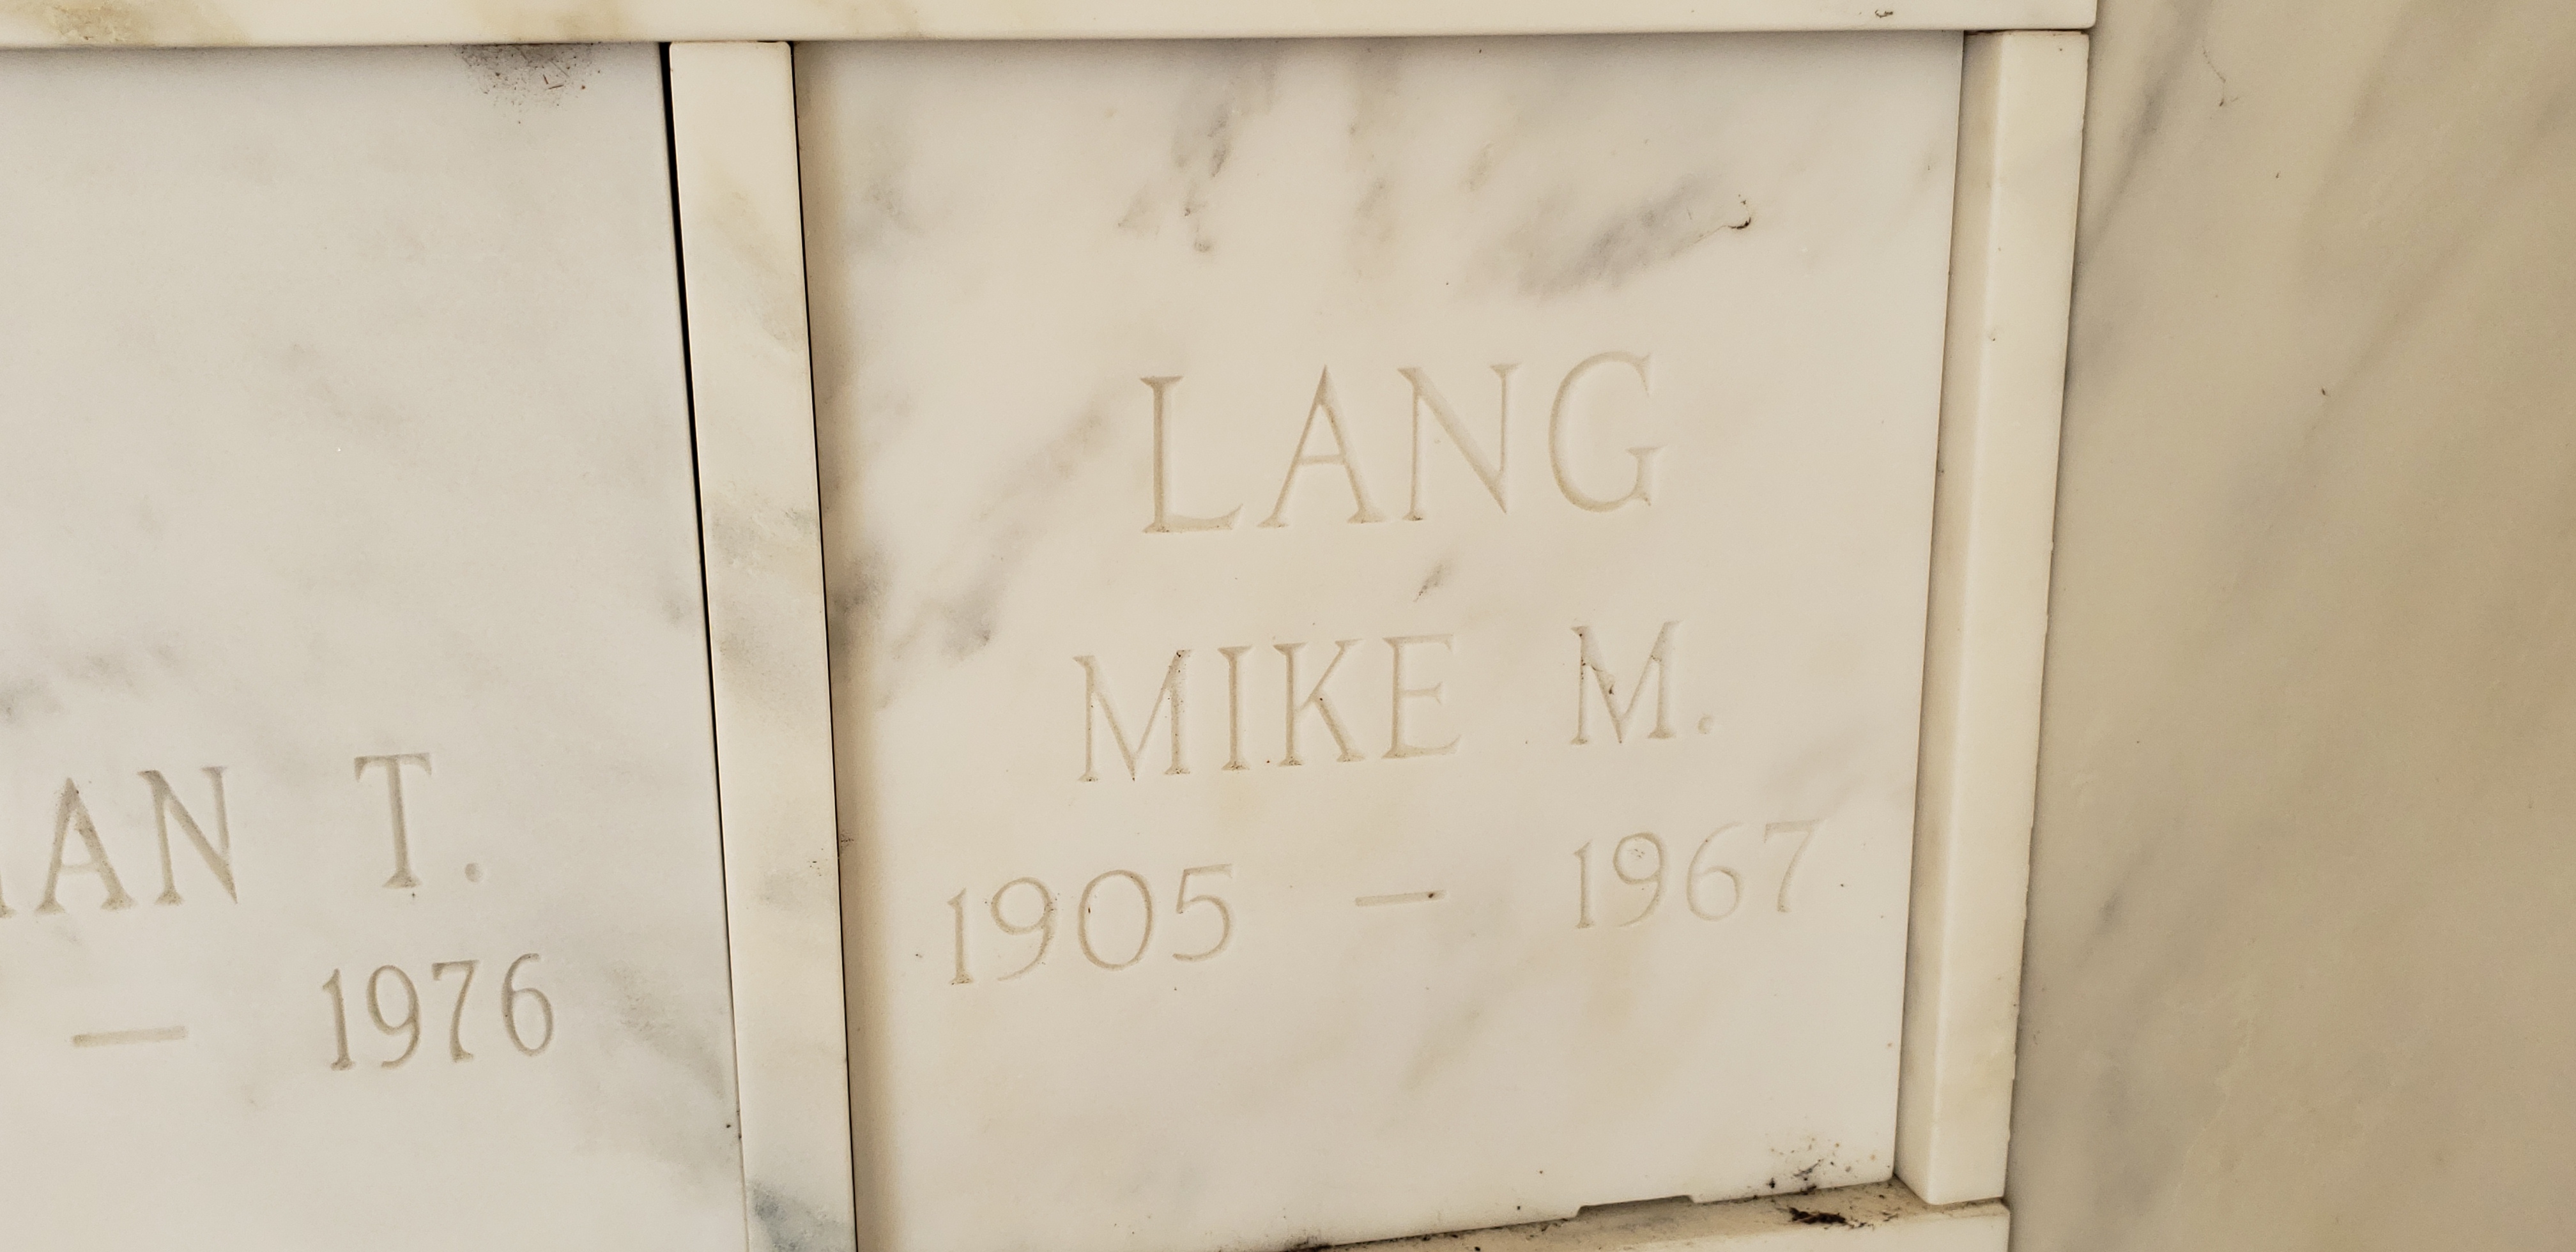 Mike M Lang